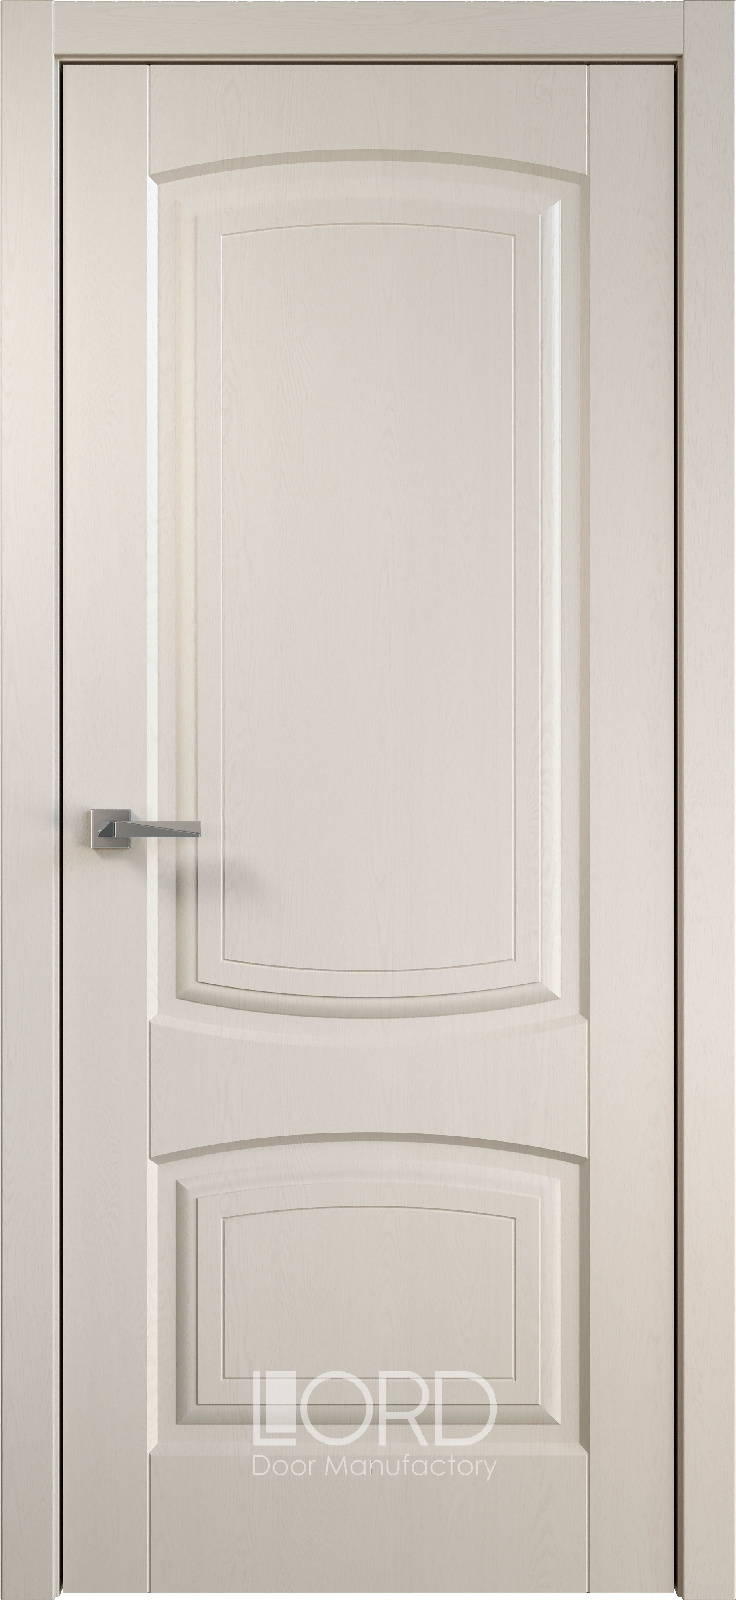 Лорд Межкомнатная дверь K 10 ДГ, арт. 22835 - фото №1